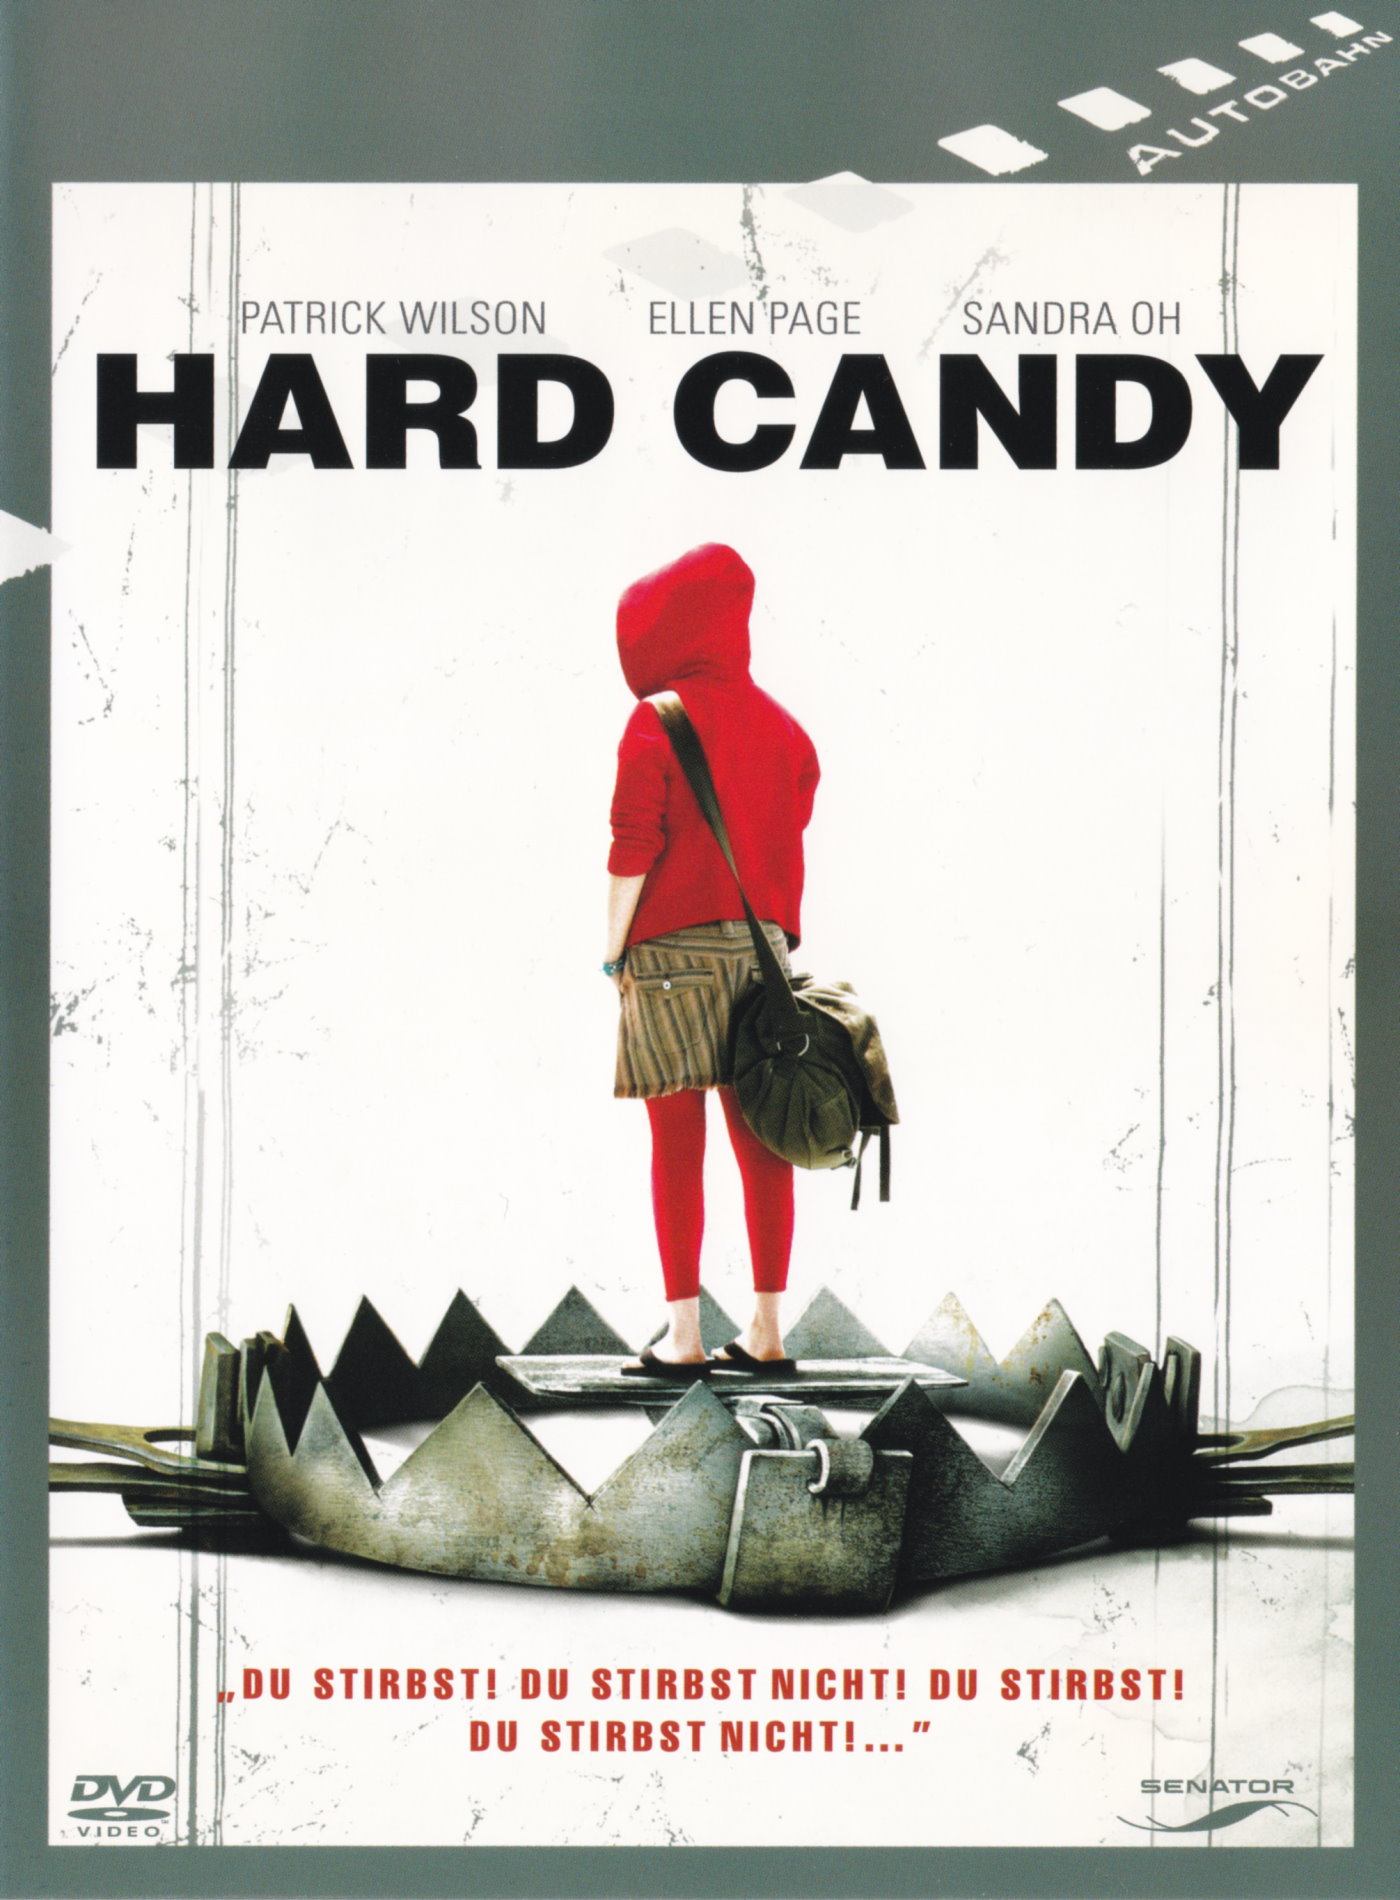 Cover - Hard Candy.jpg